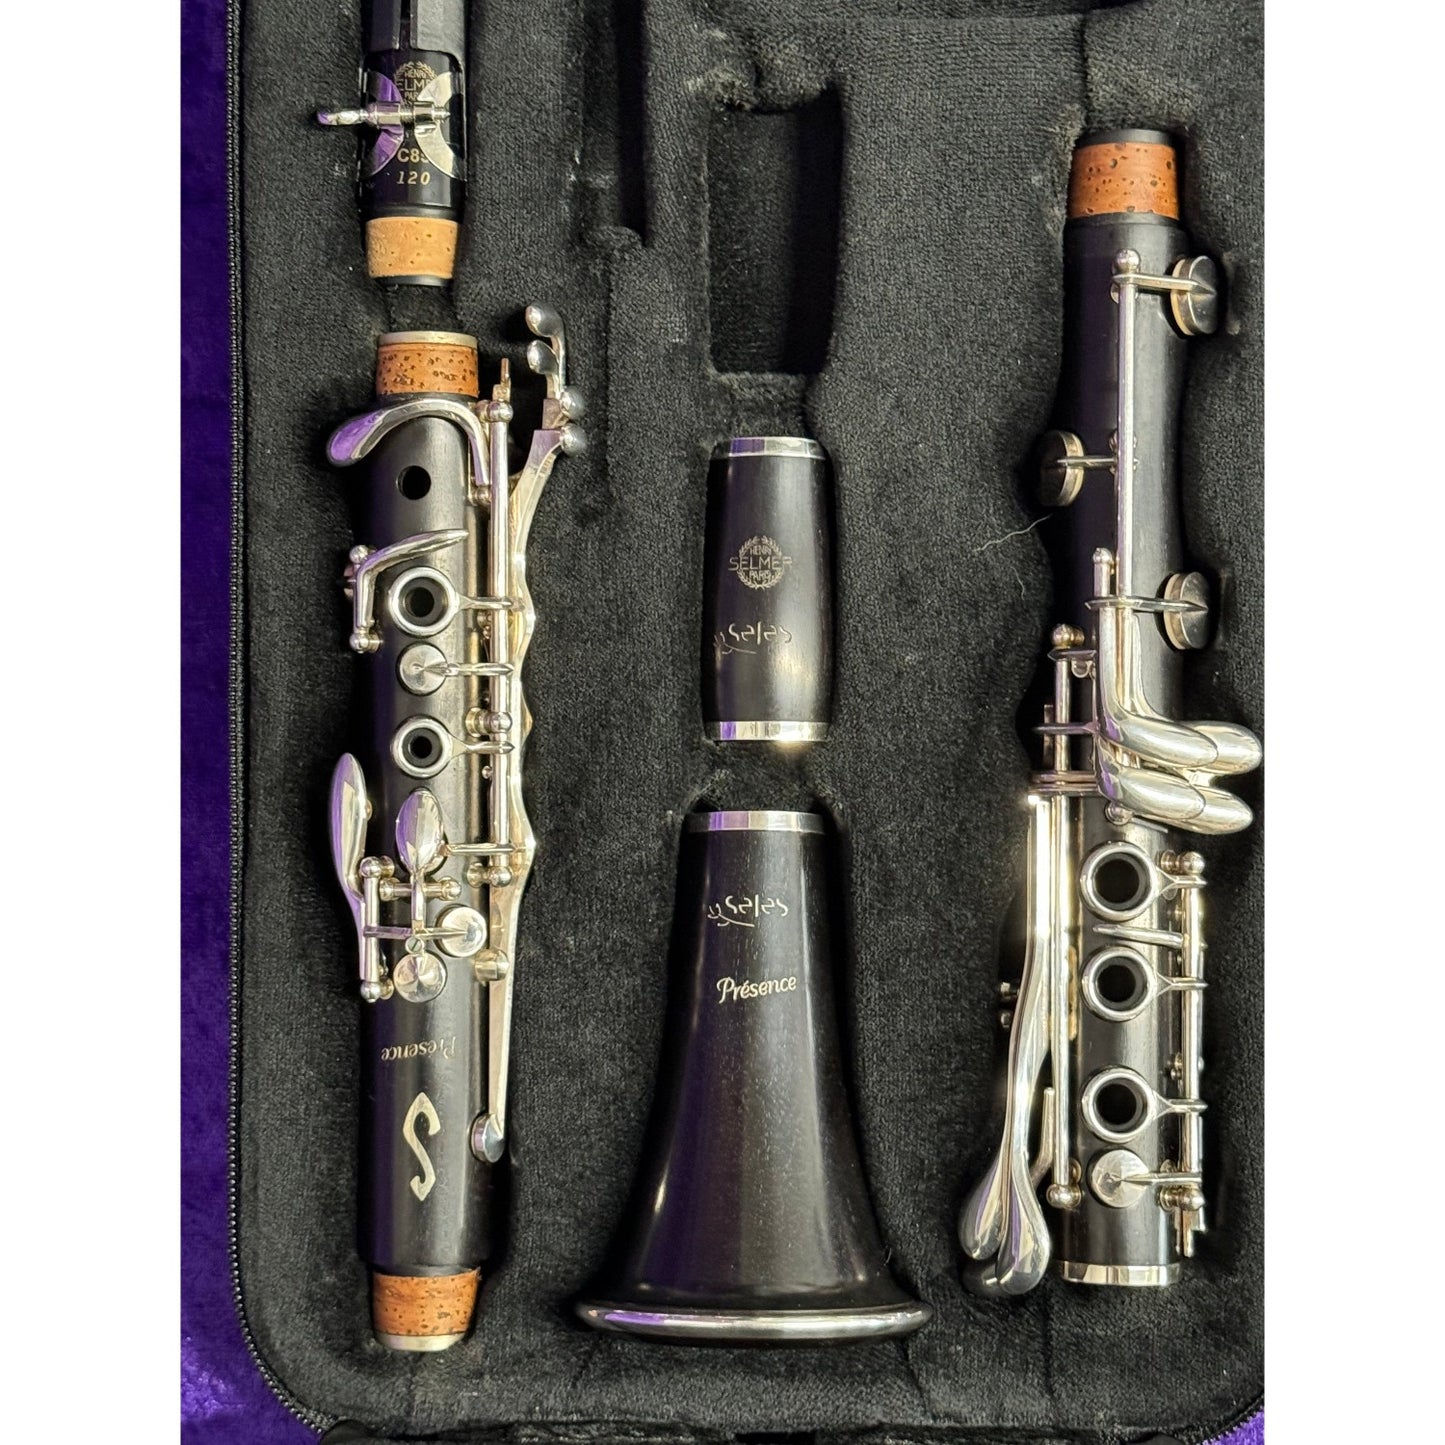 Selmer Paris Presence clarinet in case